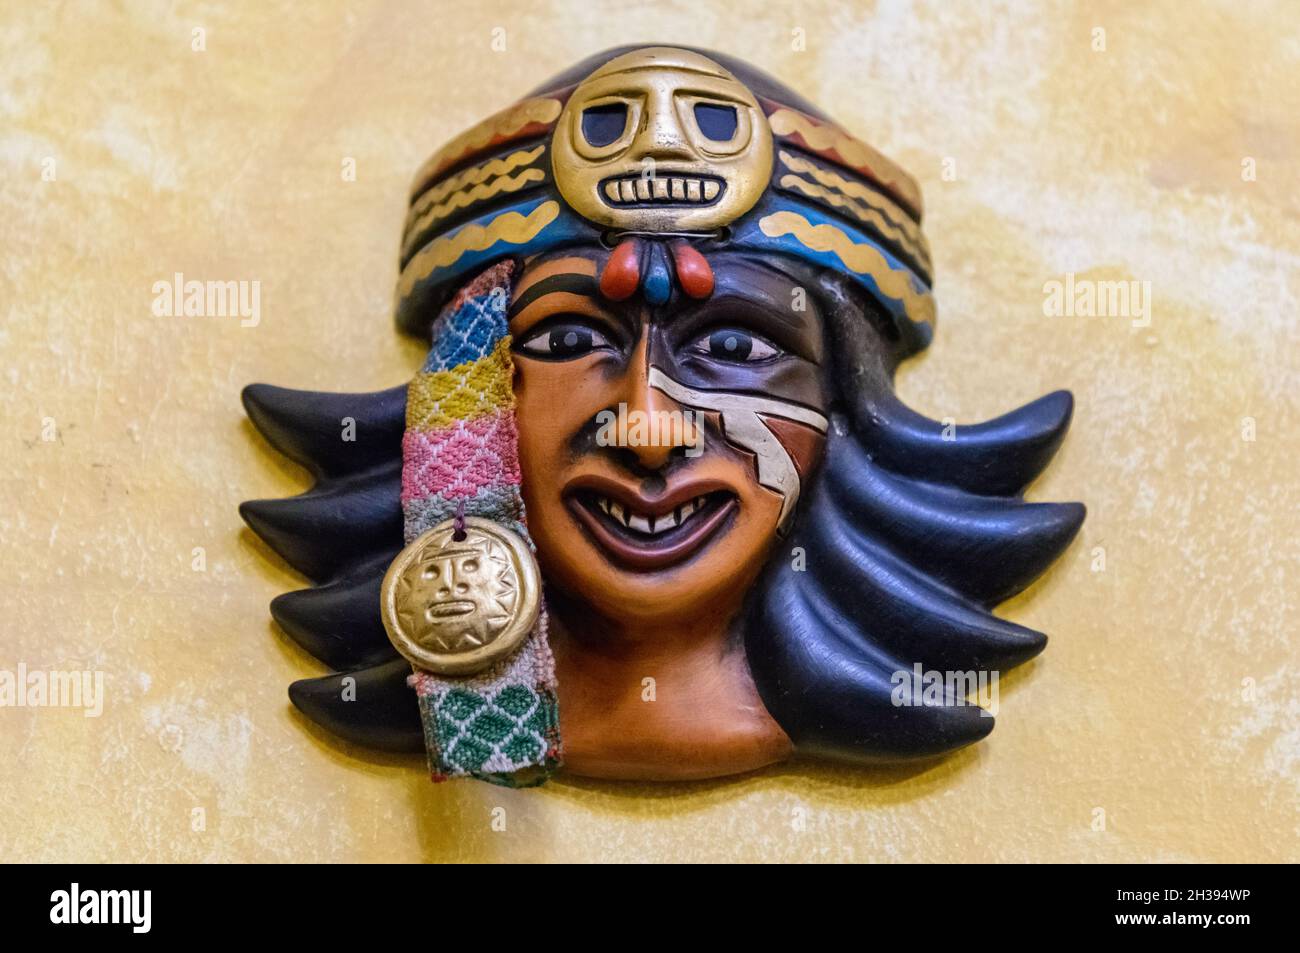 Artistic face mask of an Inca woman decorates the wall. Cuzco, Peru. Stock Photo